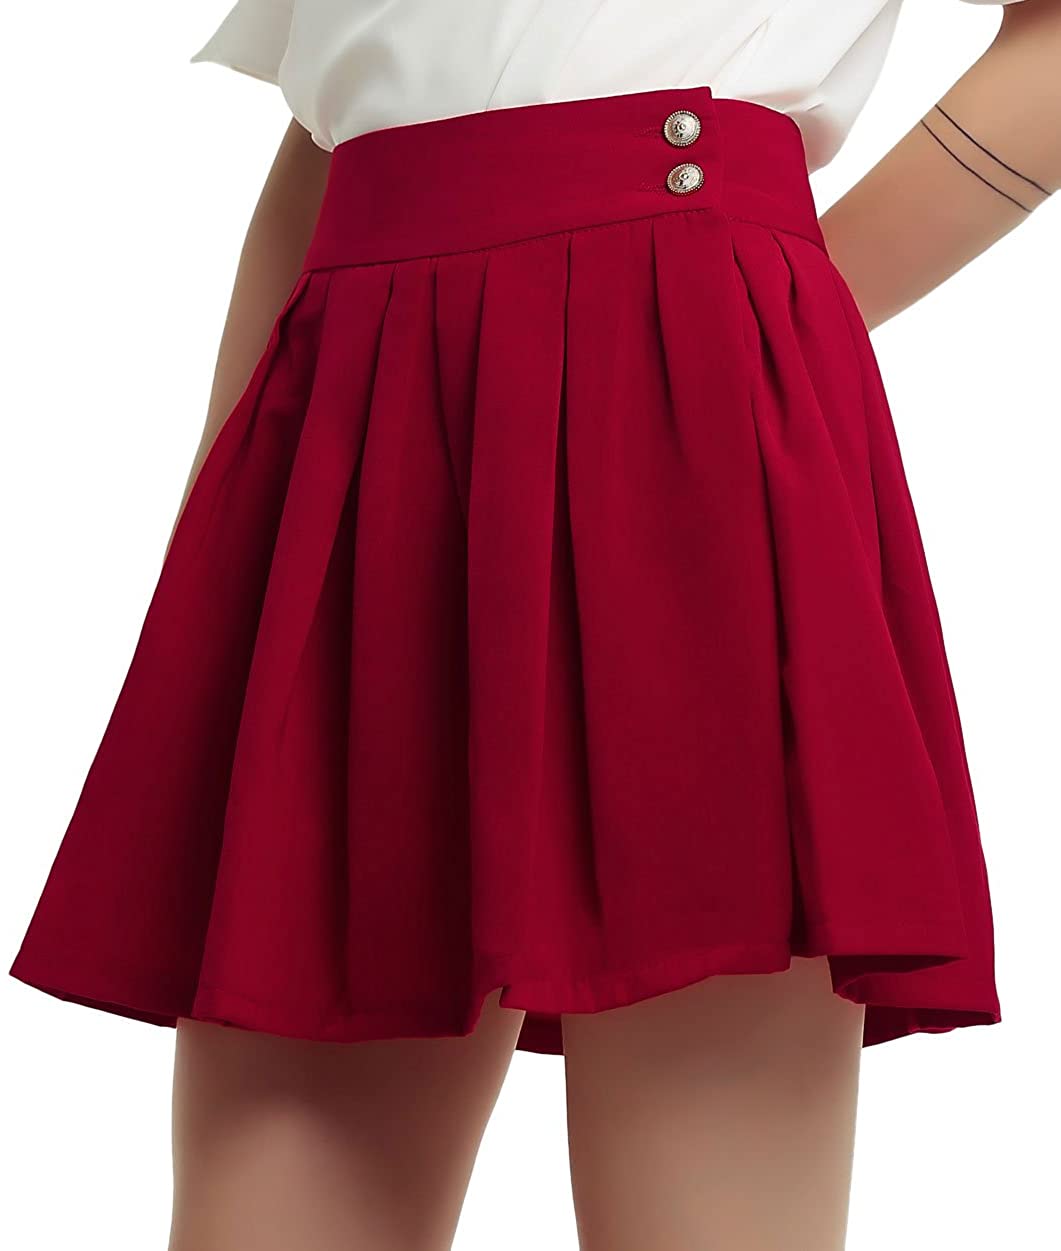 chouyatou Women's Double Waist Side Buttons Pleated Skirt 